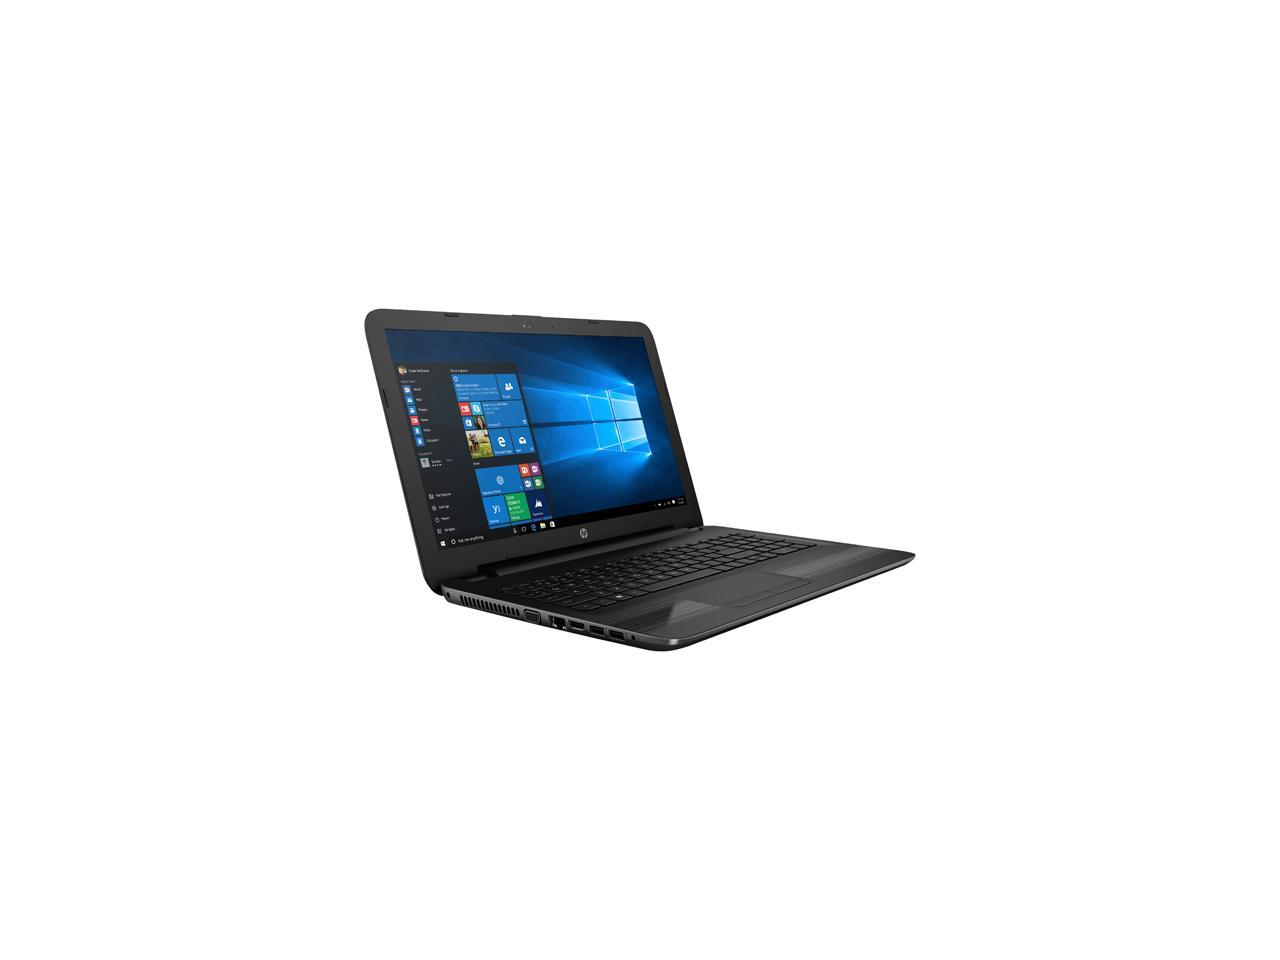 HP Laptop 250 G5 250 G5 (X9U07UT#ABA) Intel Core i5 6th Gen 6200U (2.30 GHz) 8 GB Memory 256 GB SSD Intel HD Graphics 520 15.6" Windows 10 Home 64-Bit